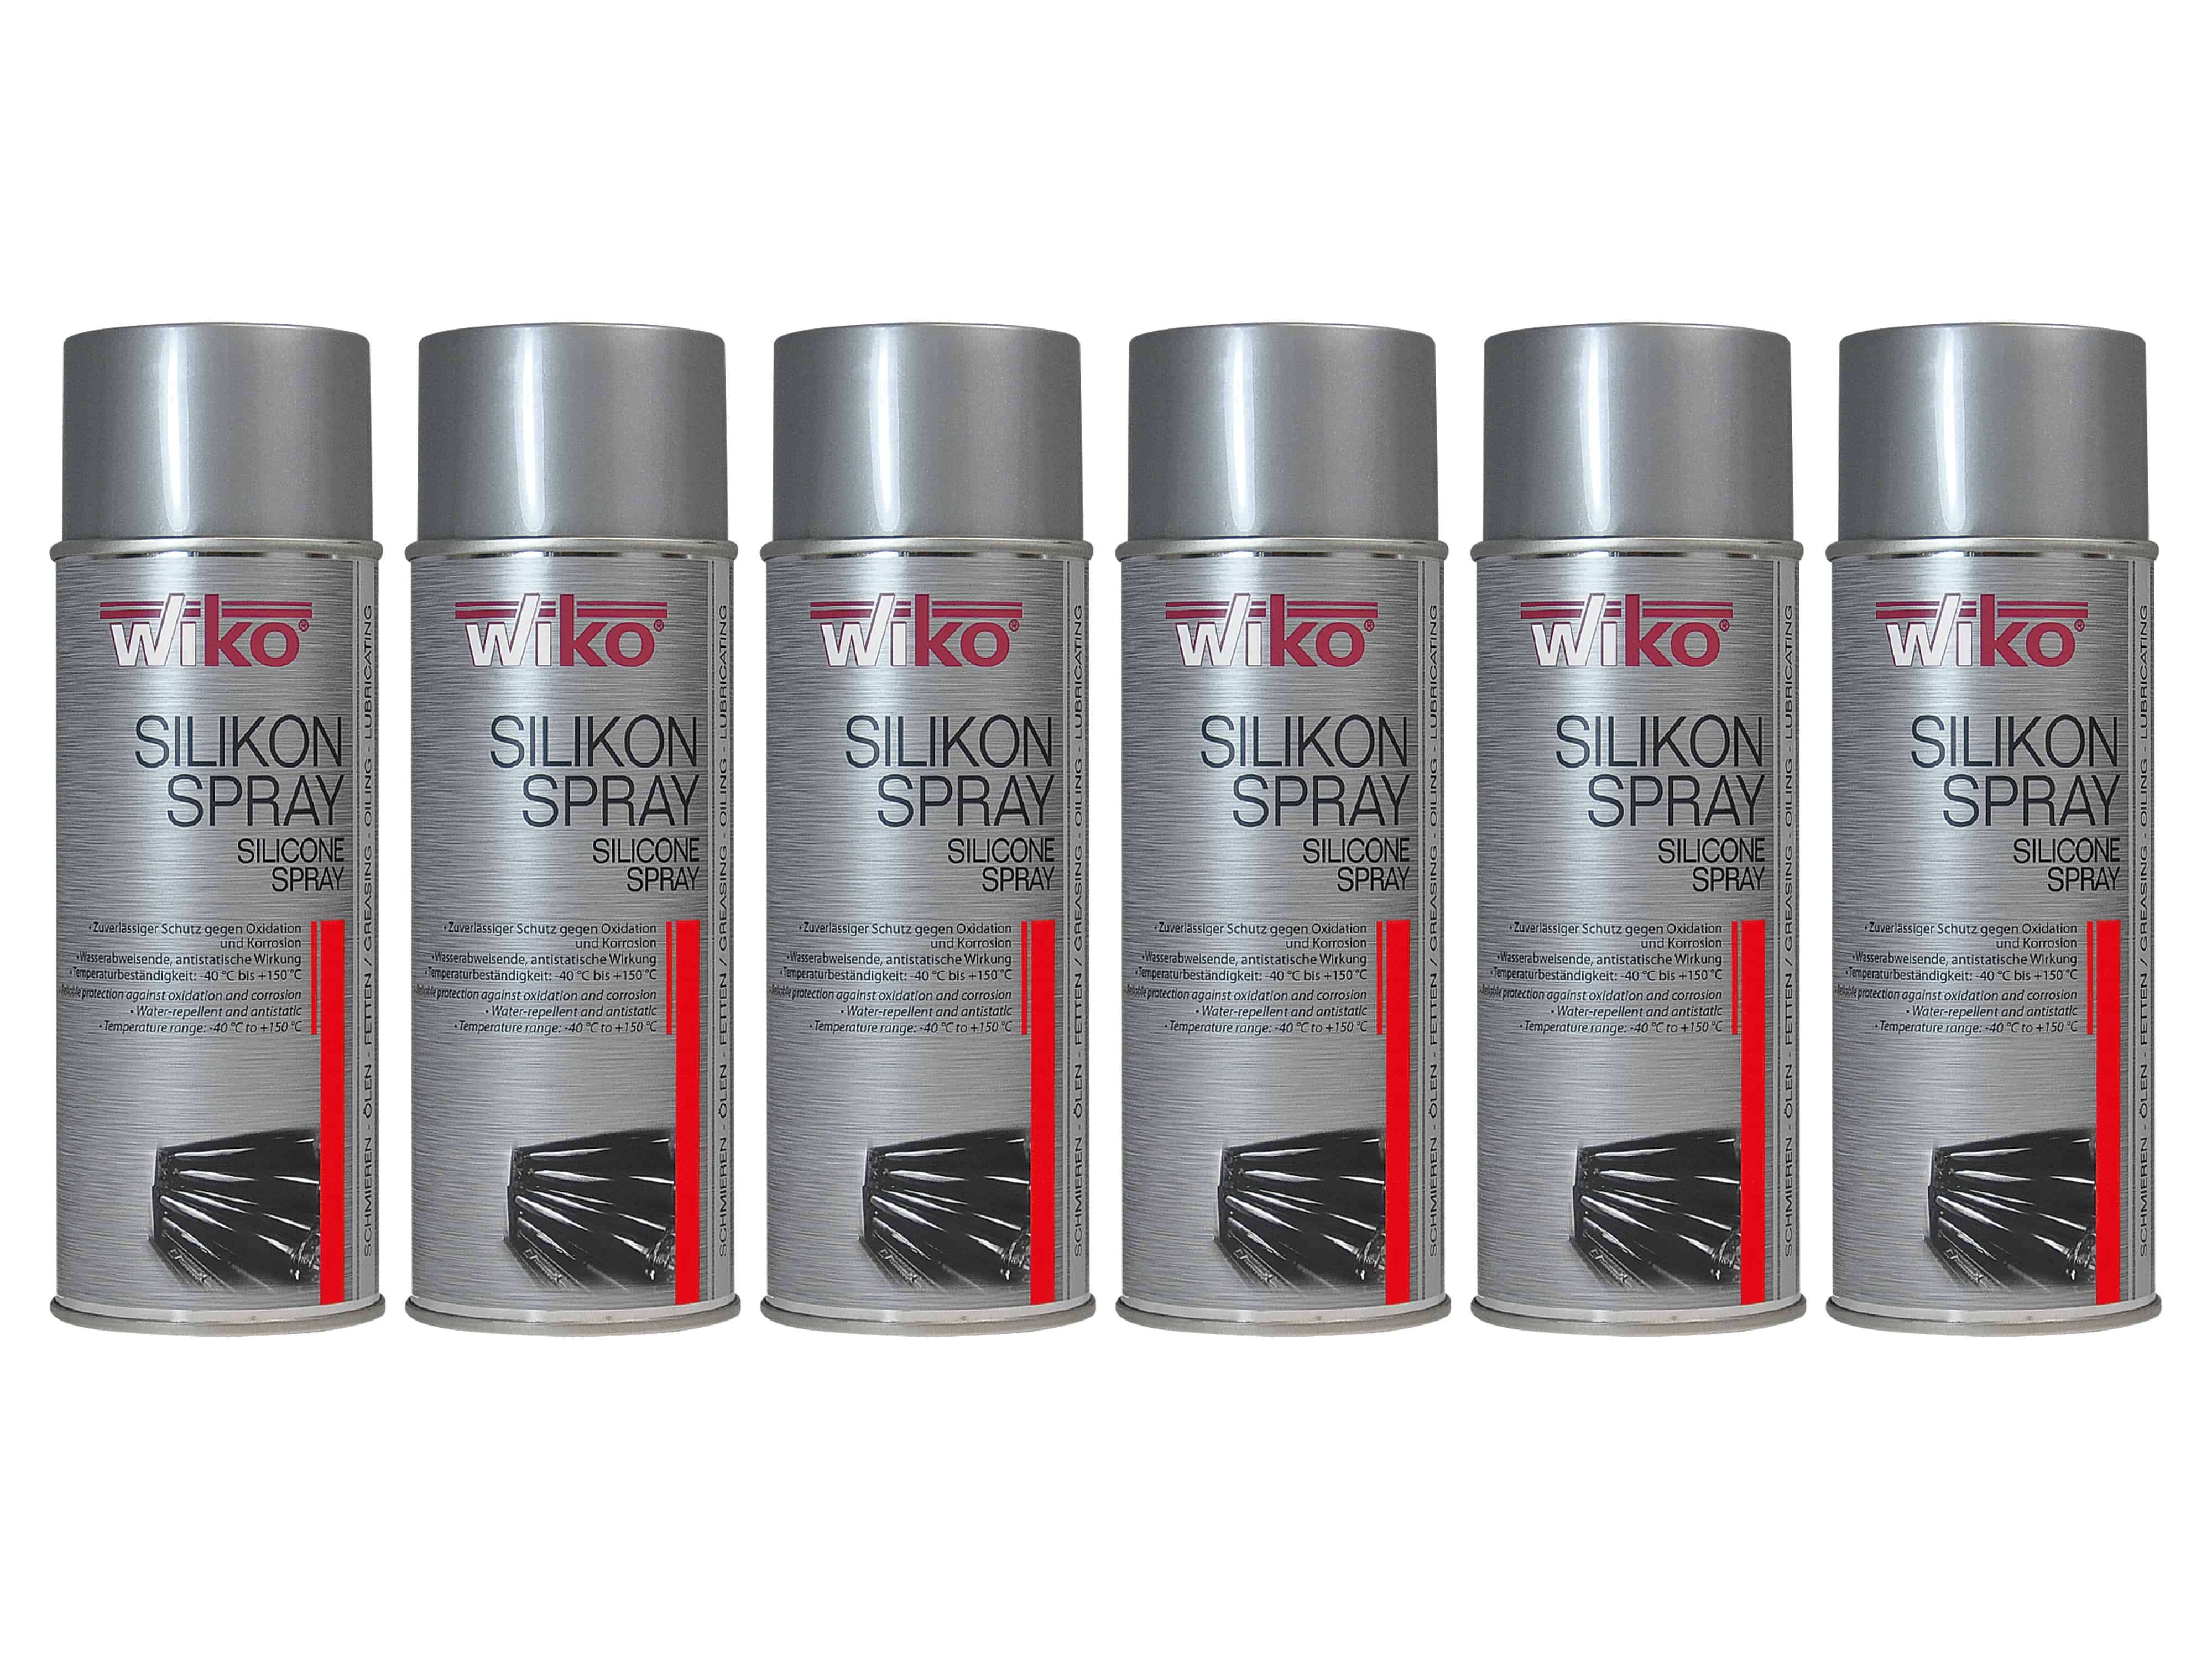 WIKO Silikon-Spray, 400 ml, 6 Stück